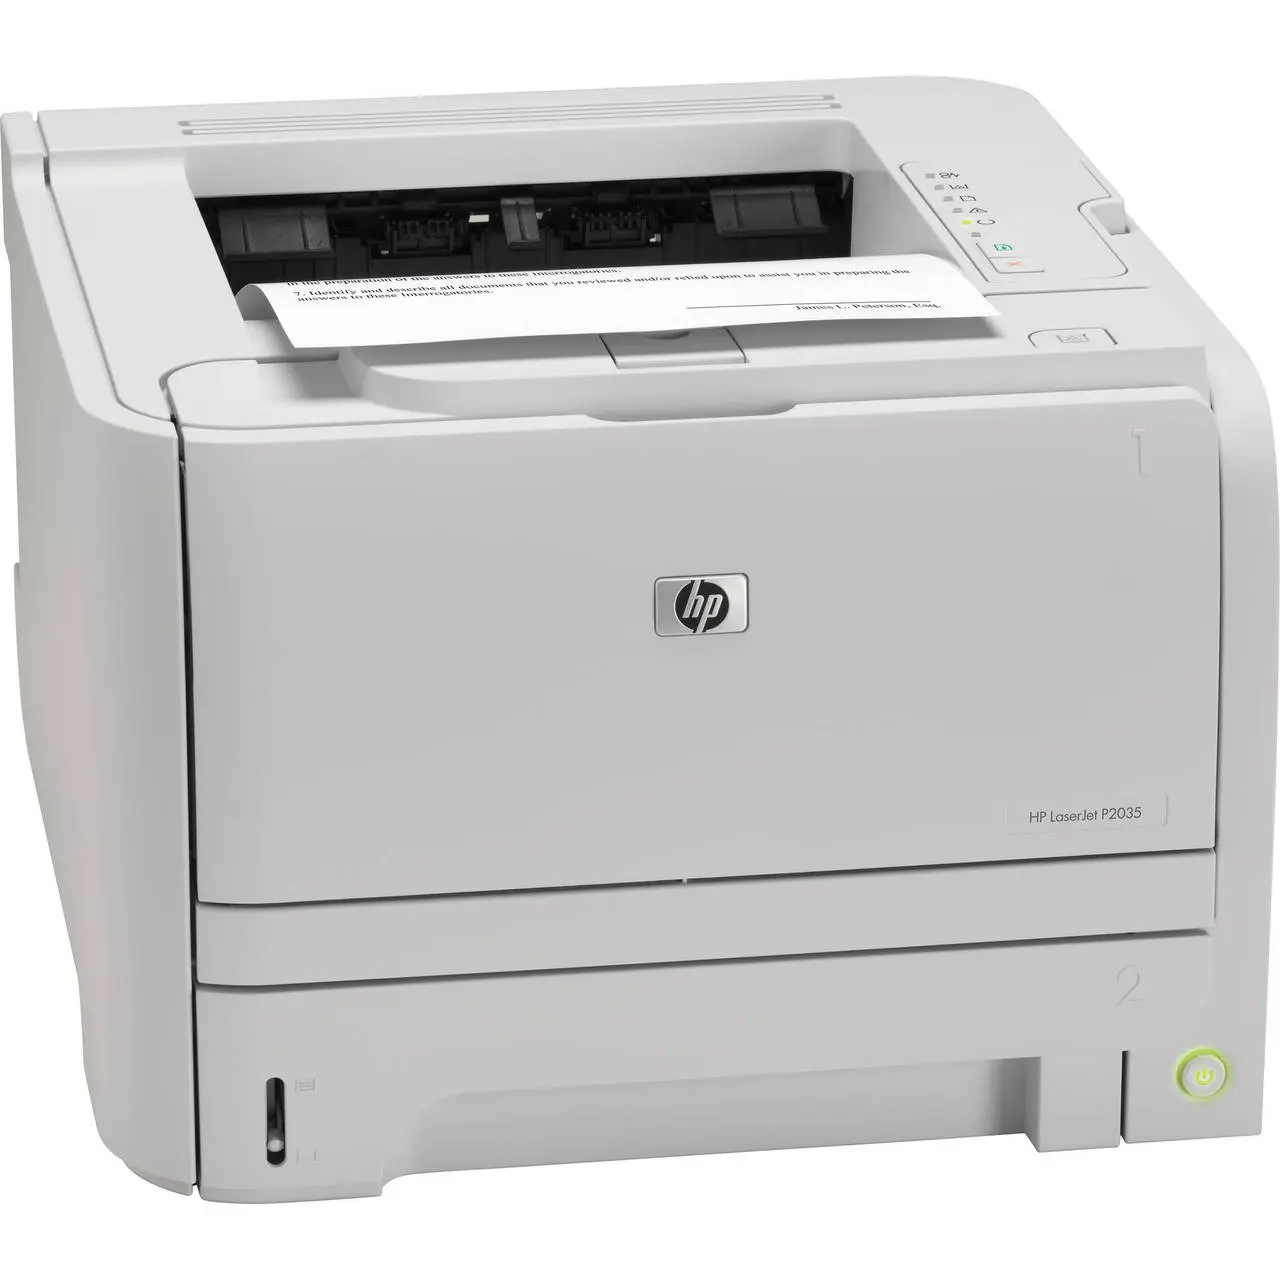 hewlett packard printers - How many years do HP printers last